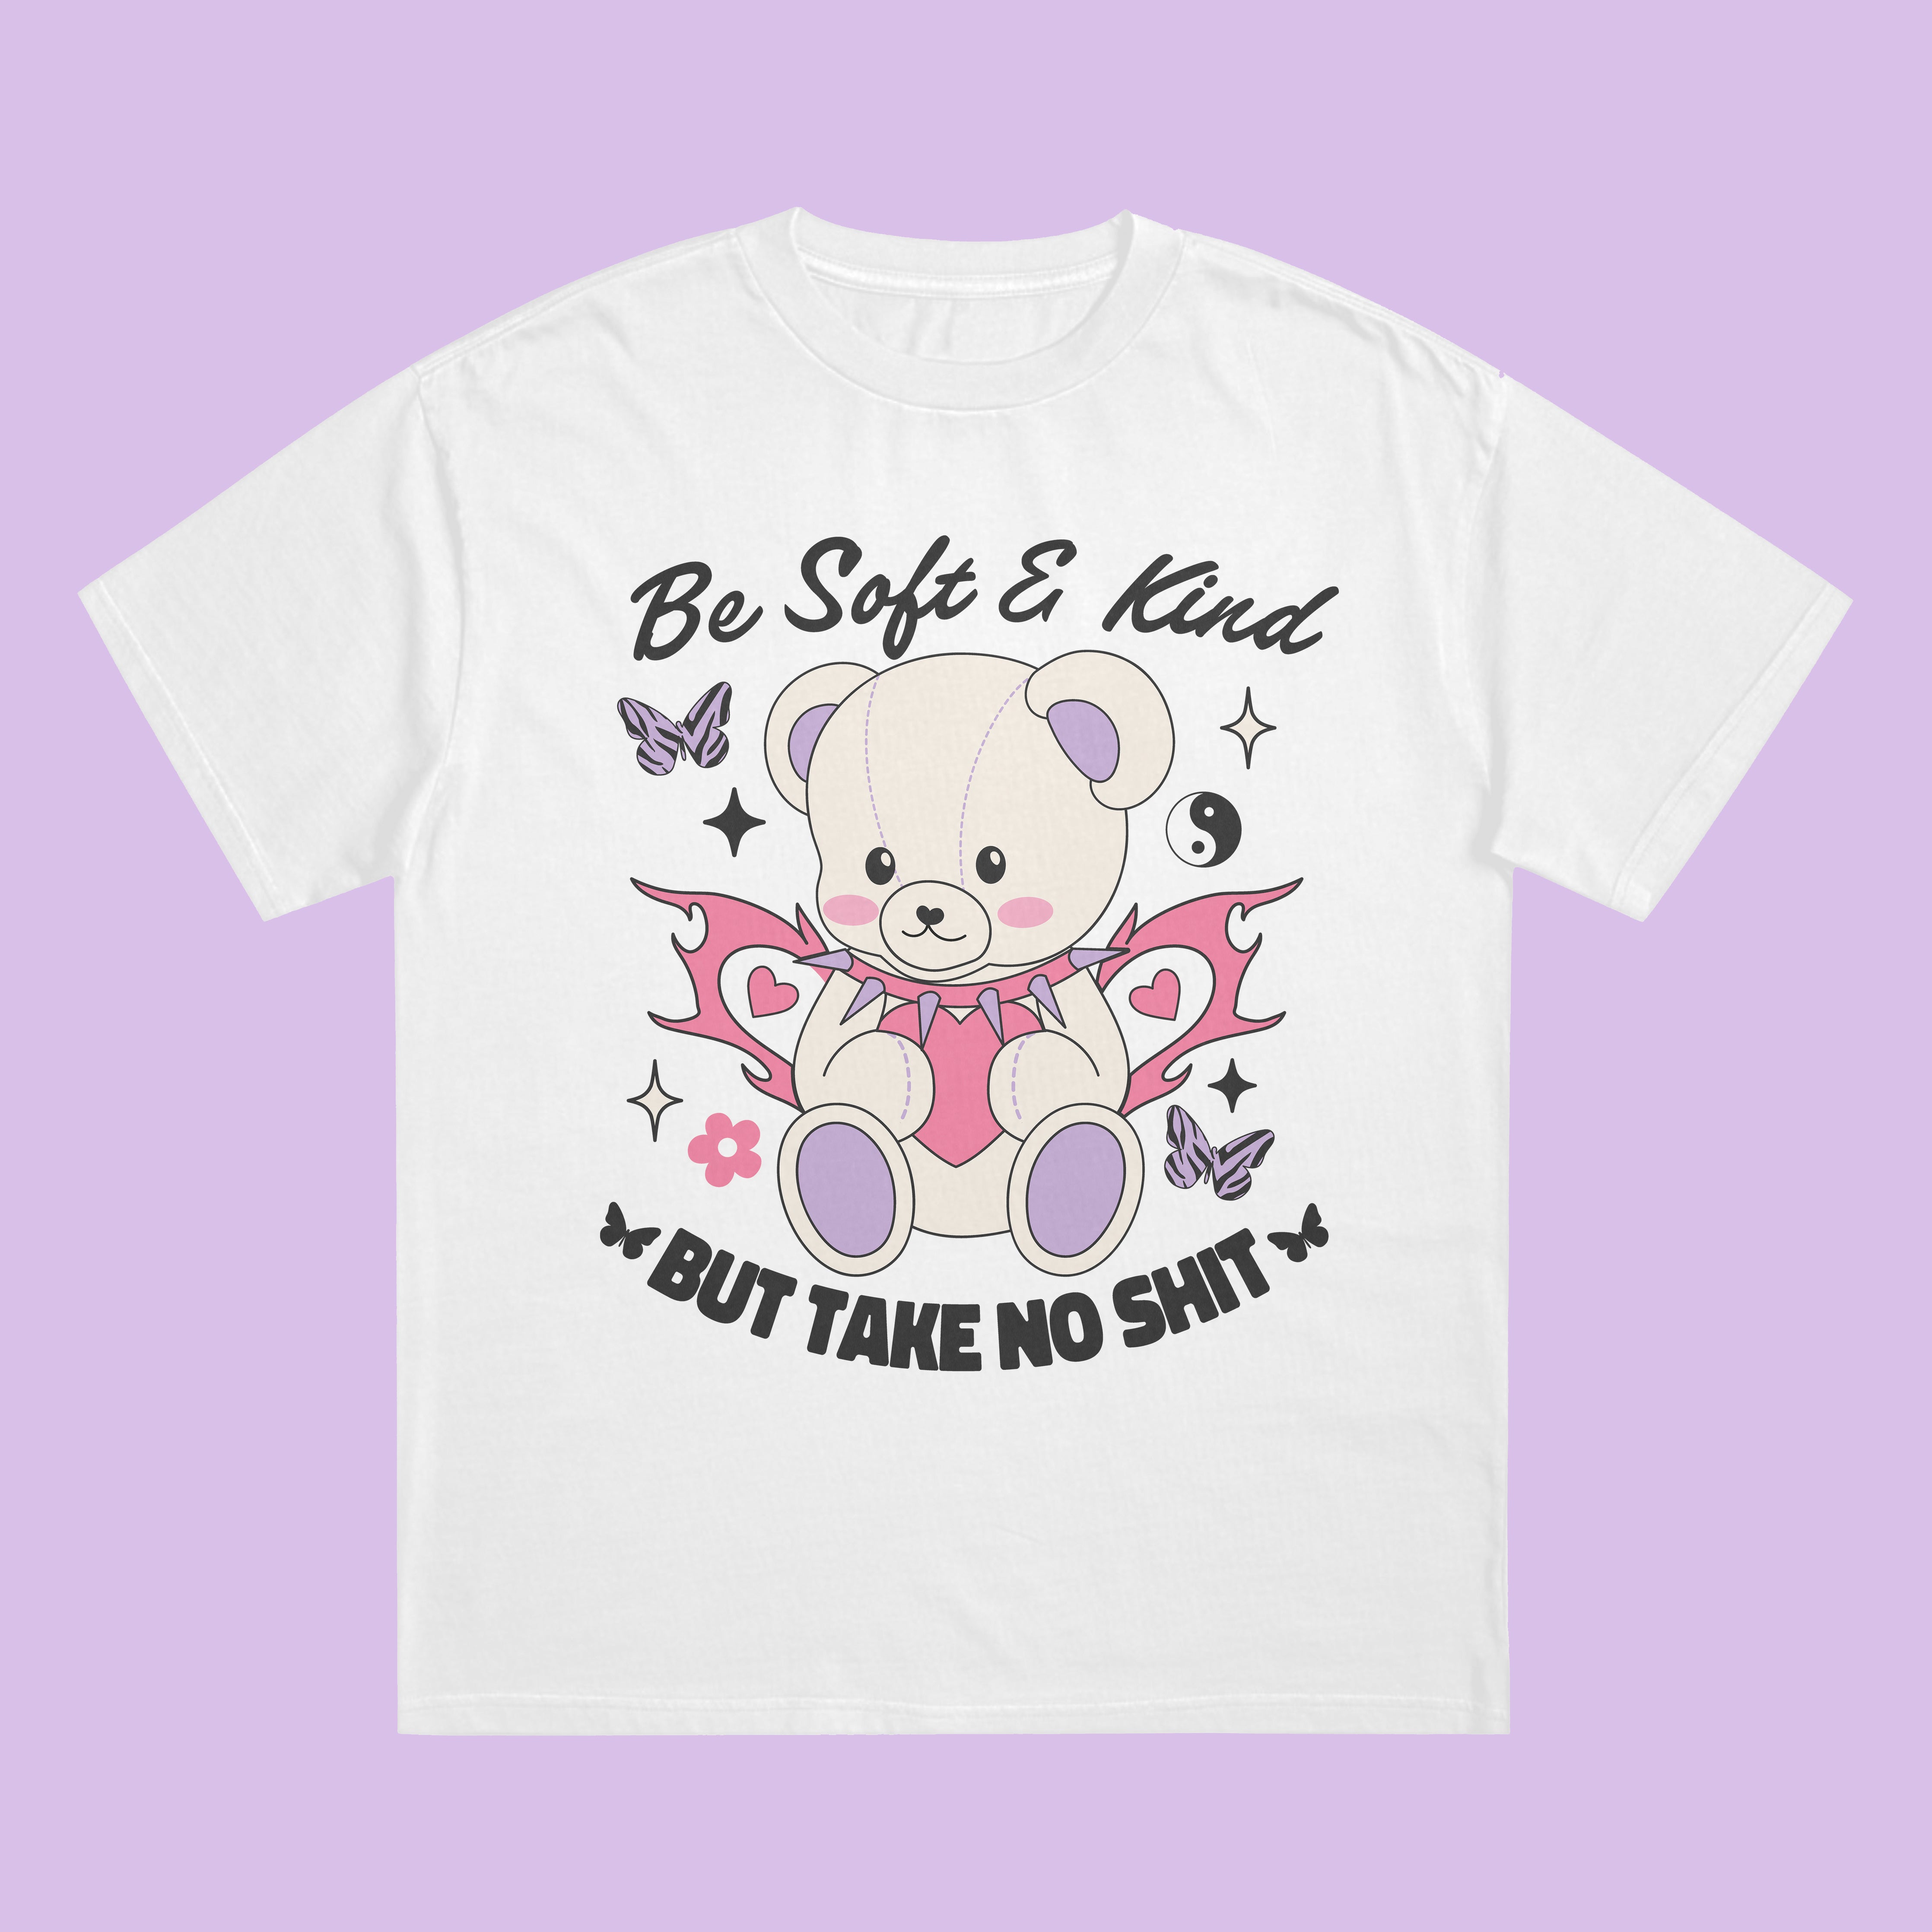 Be Soft & Kind But Take No Shit T-Shirt